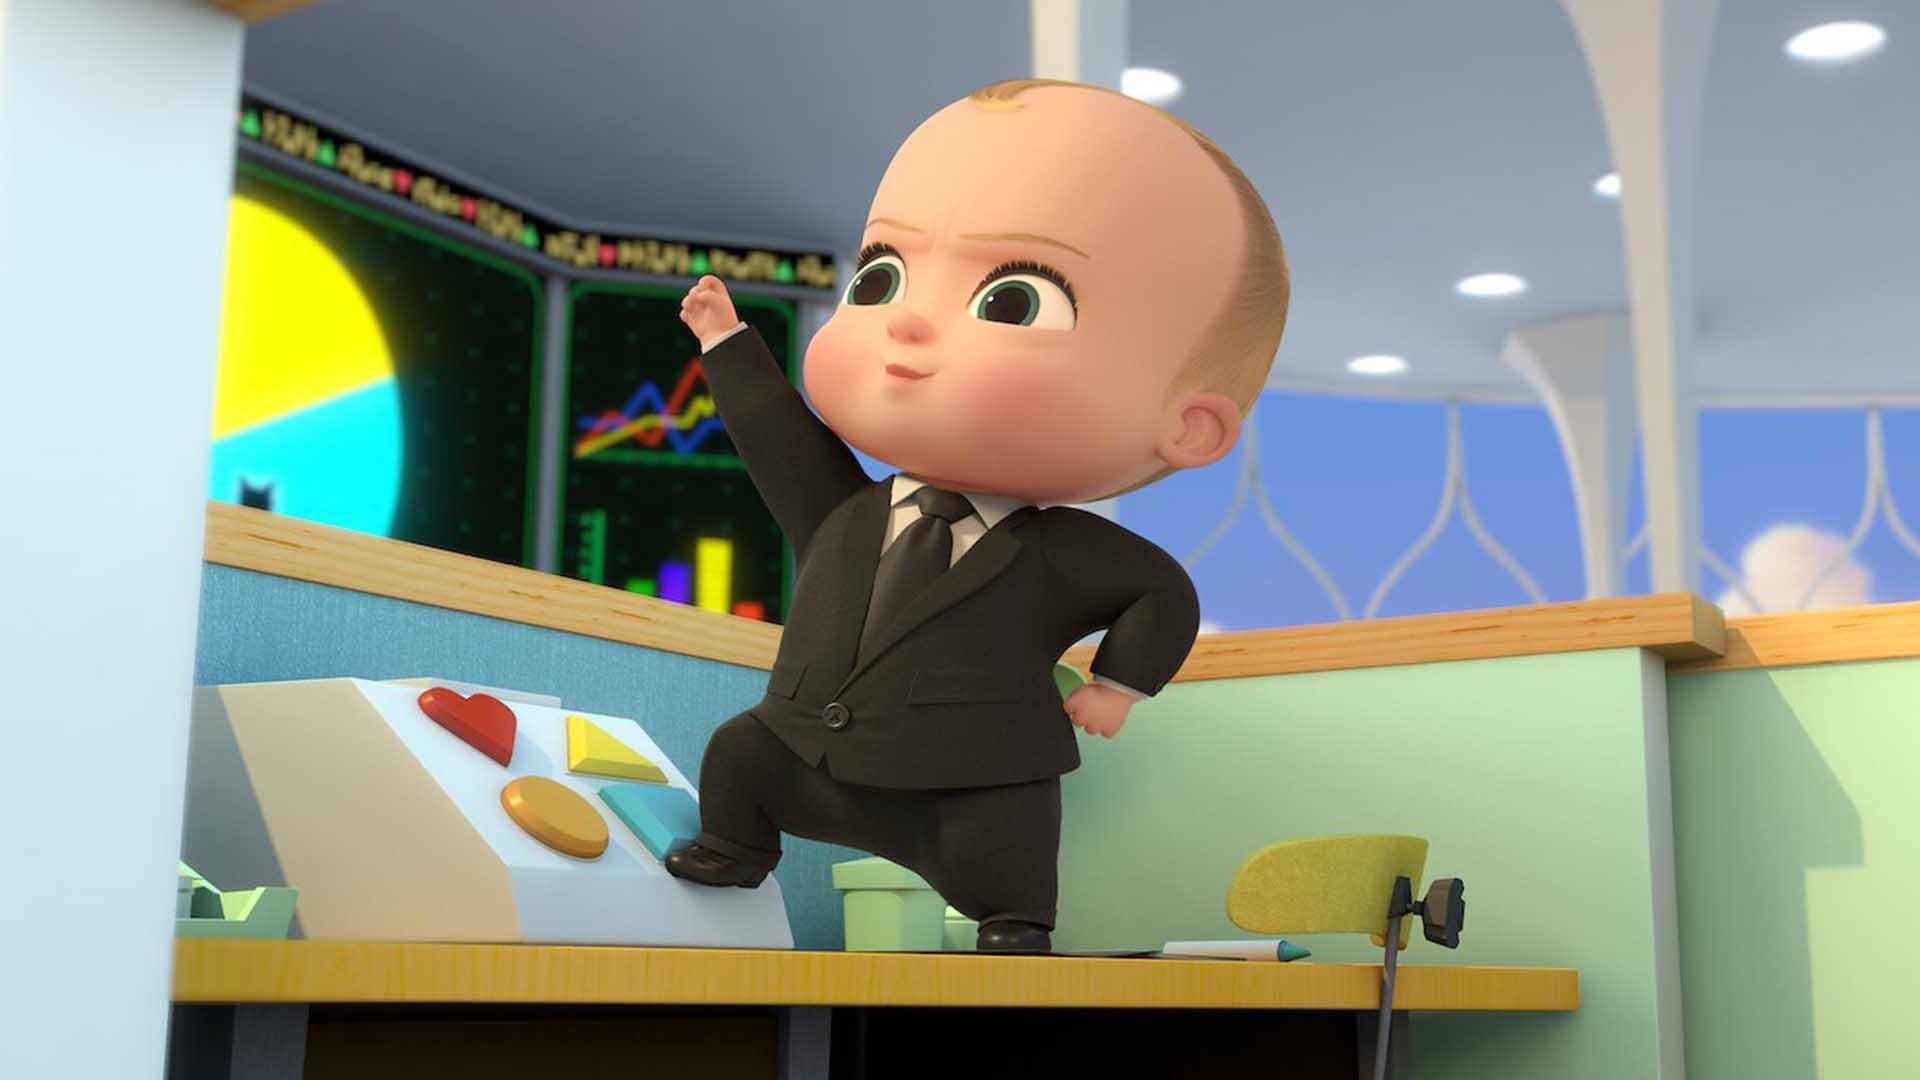 تئودور تمپلتون در دفتر کار خود در انیمیشن سریالی The Boss Baby: Back in Business